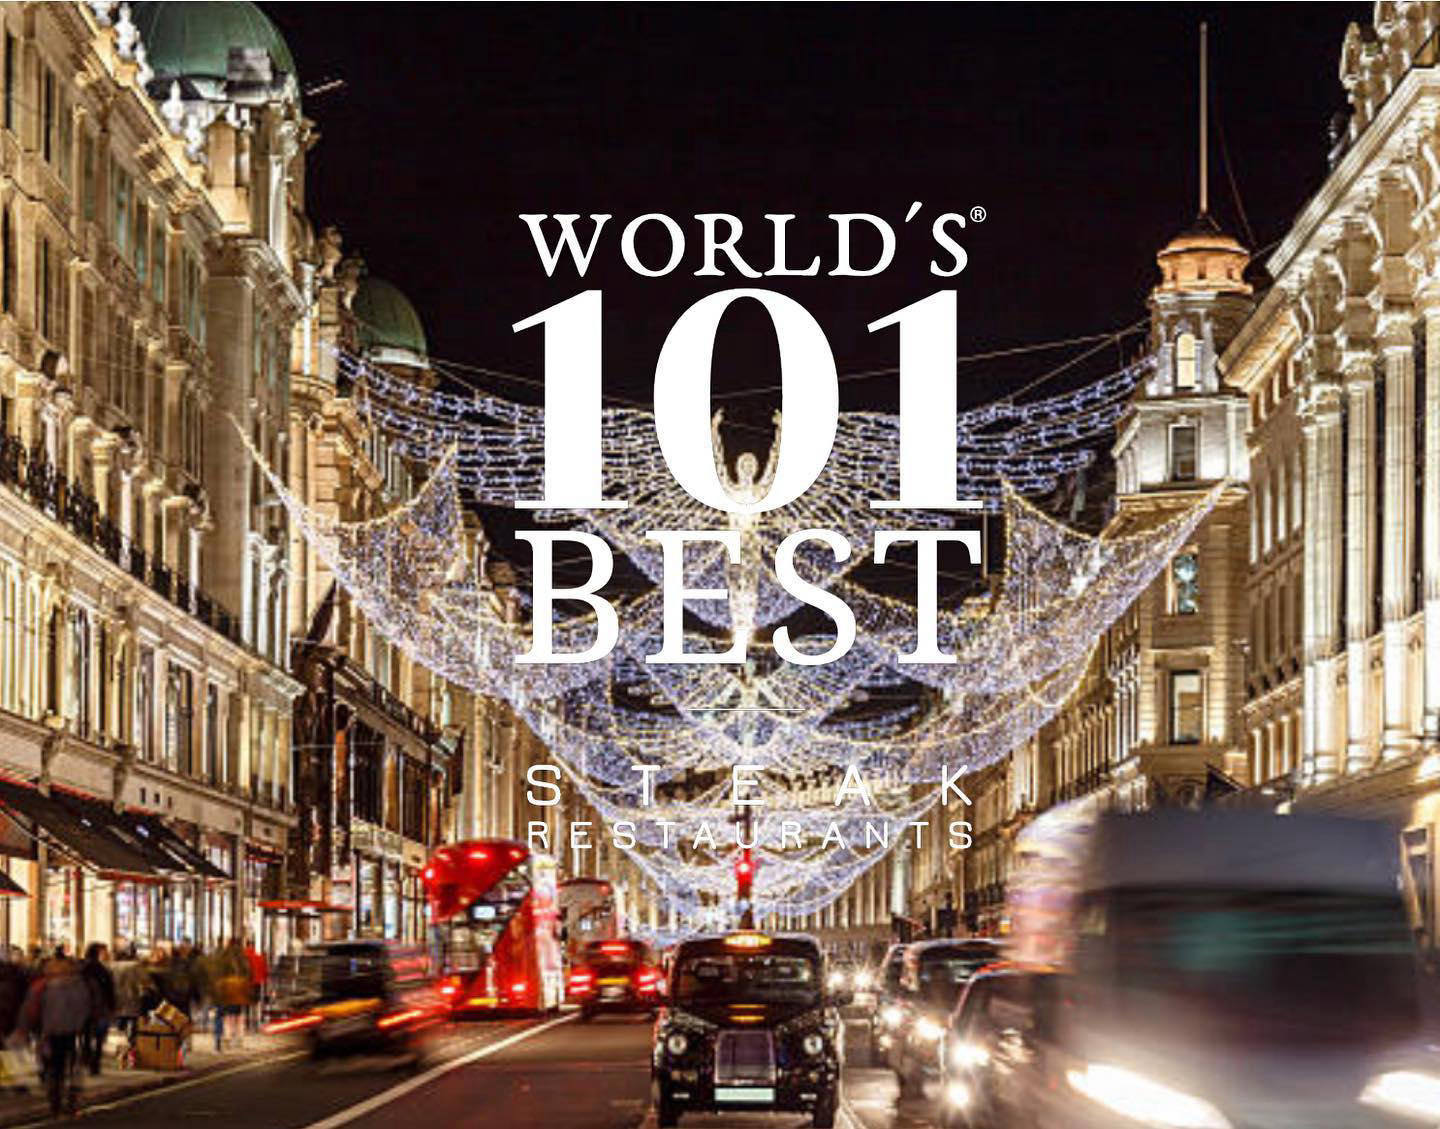 World's Best Steak Restaurants - Wishing you all a wonderful festive season and a splendid 2023